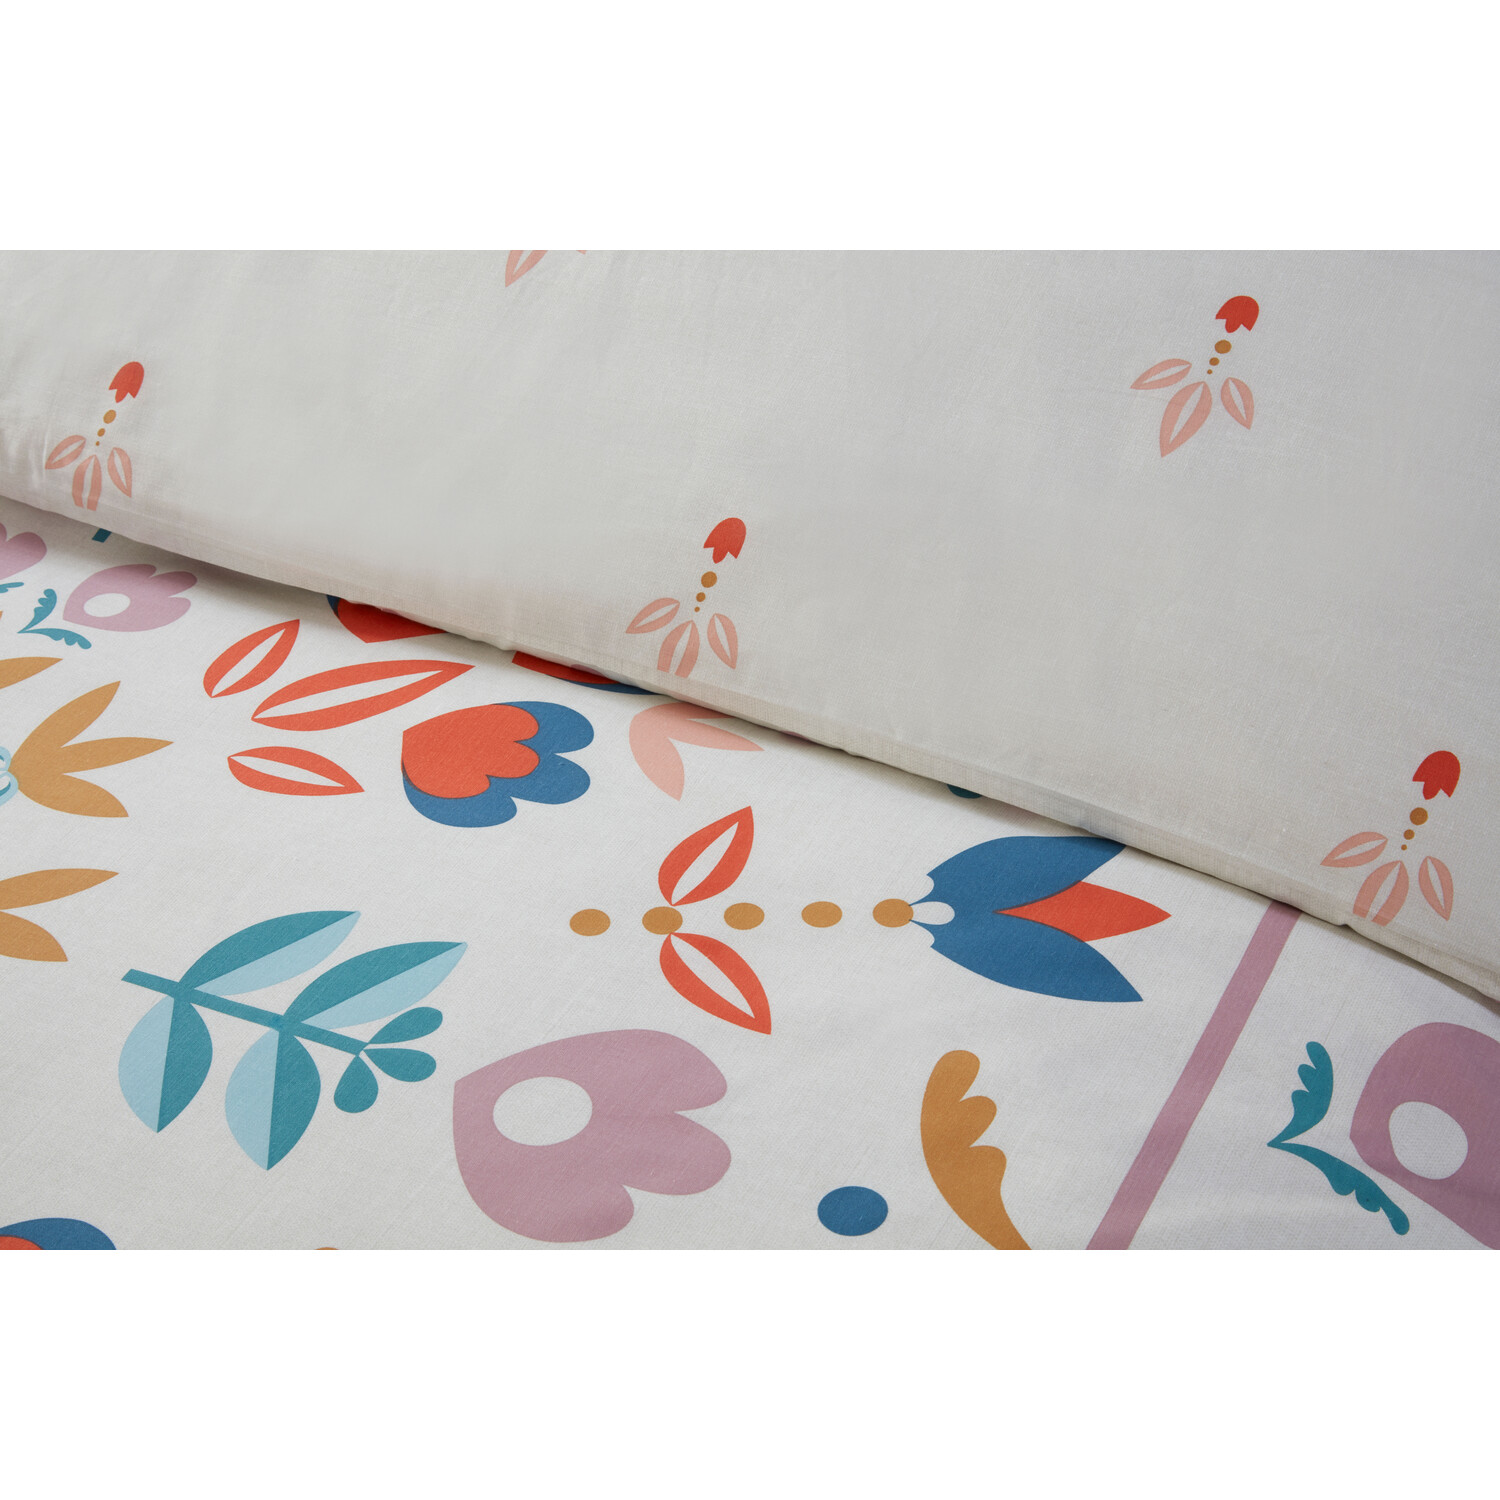 Amari Floral Duvet Cover and Pillowcase Set - King Image 4